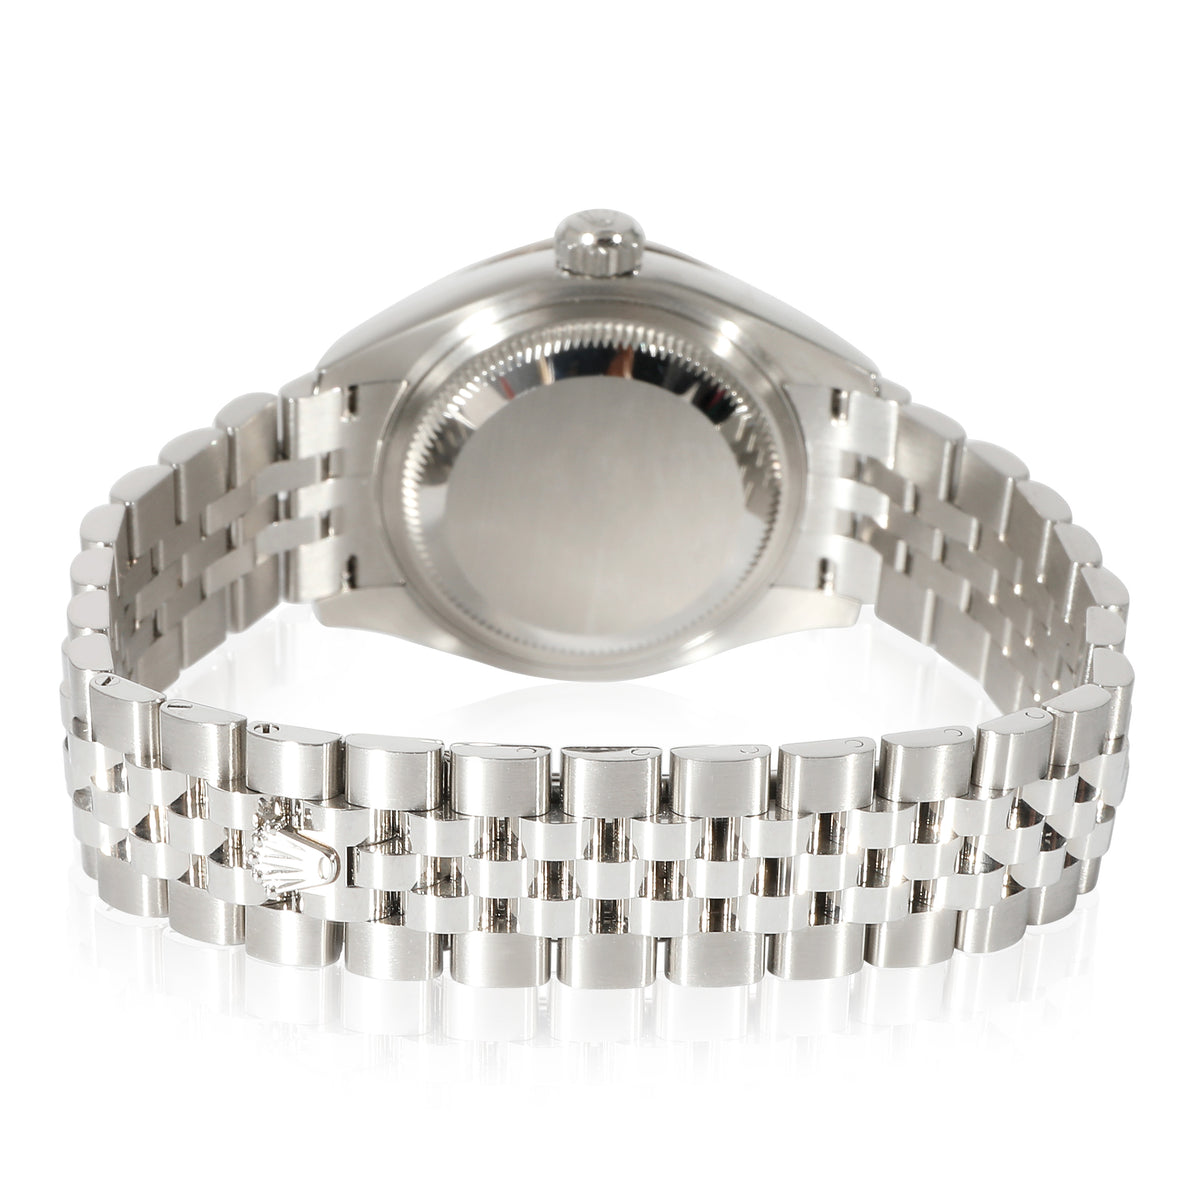 Rolex Datejust 279384 Women's Watch in 18kt Stainless Steel/White Gold